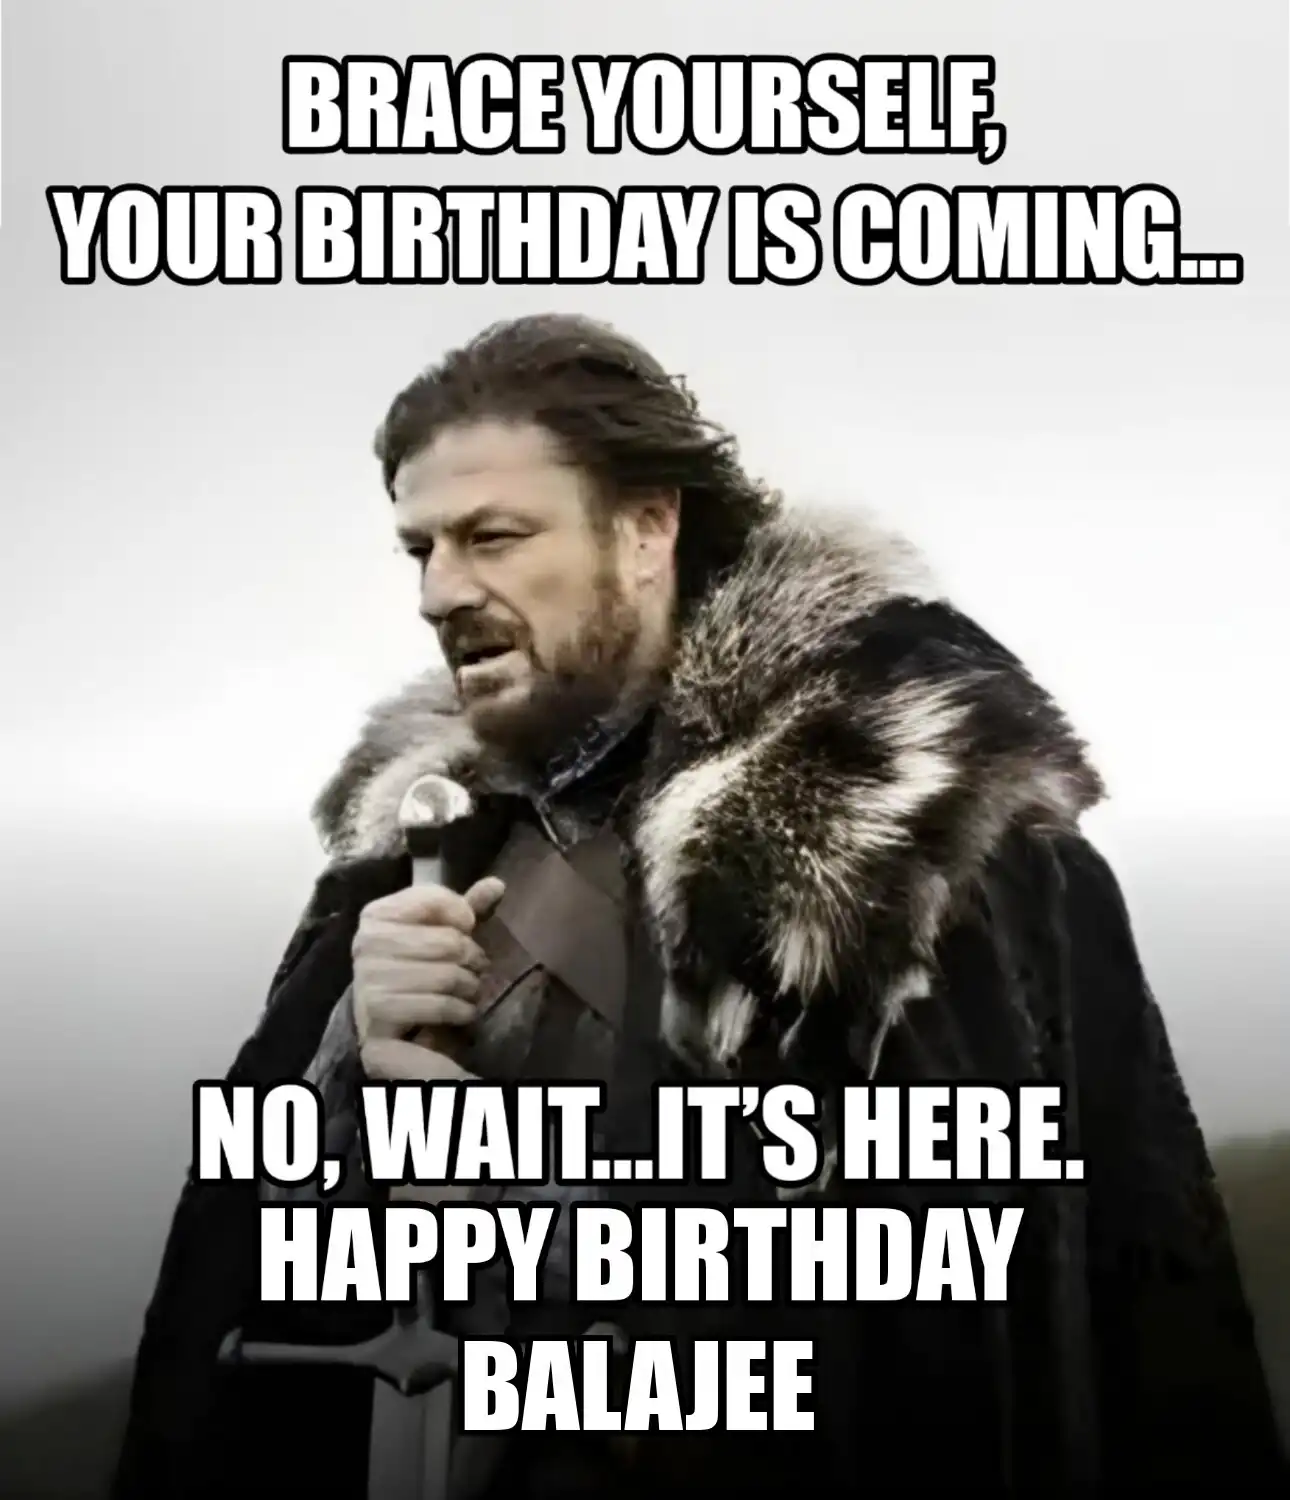 Happy Birthday Balajee Brace Yourself Your Birthday Is Coming Meme